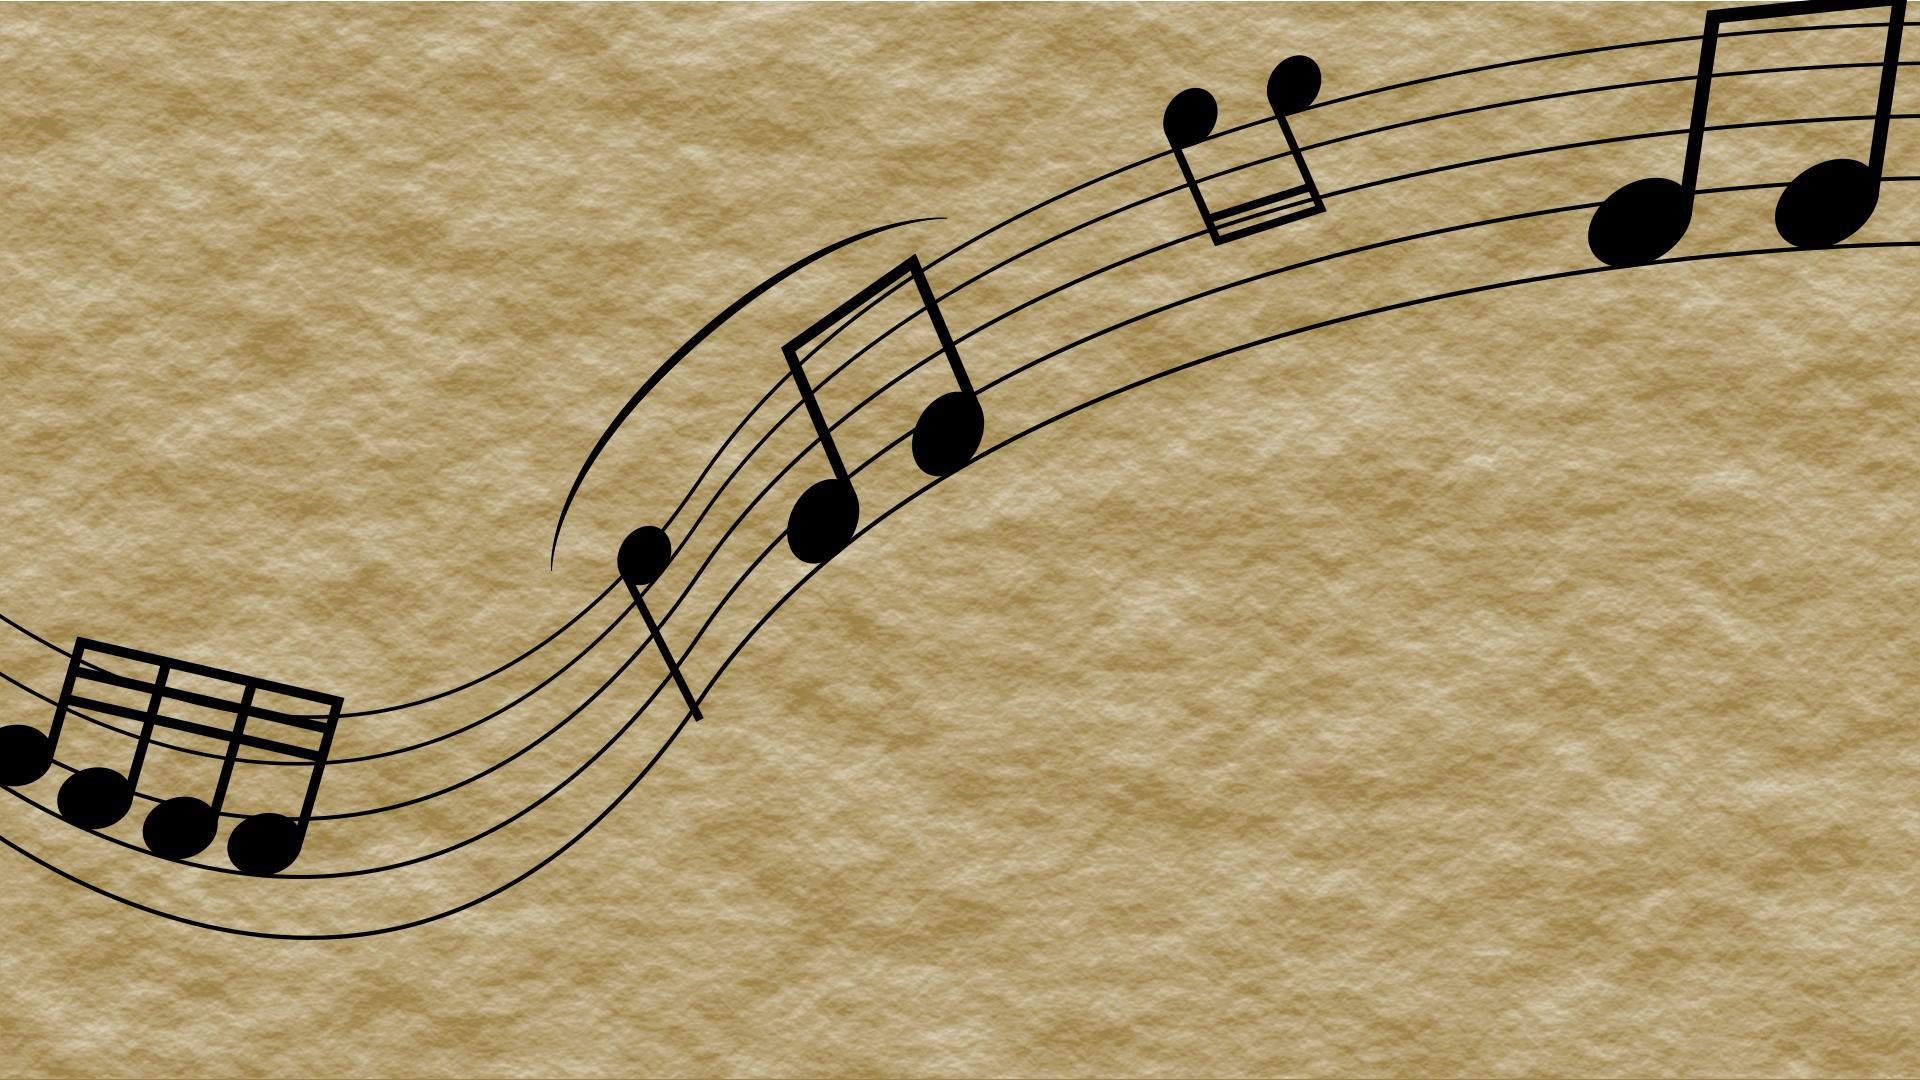 Fondos de pantalla de notas musicales - FondosMil